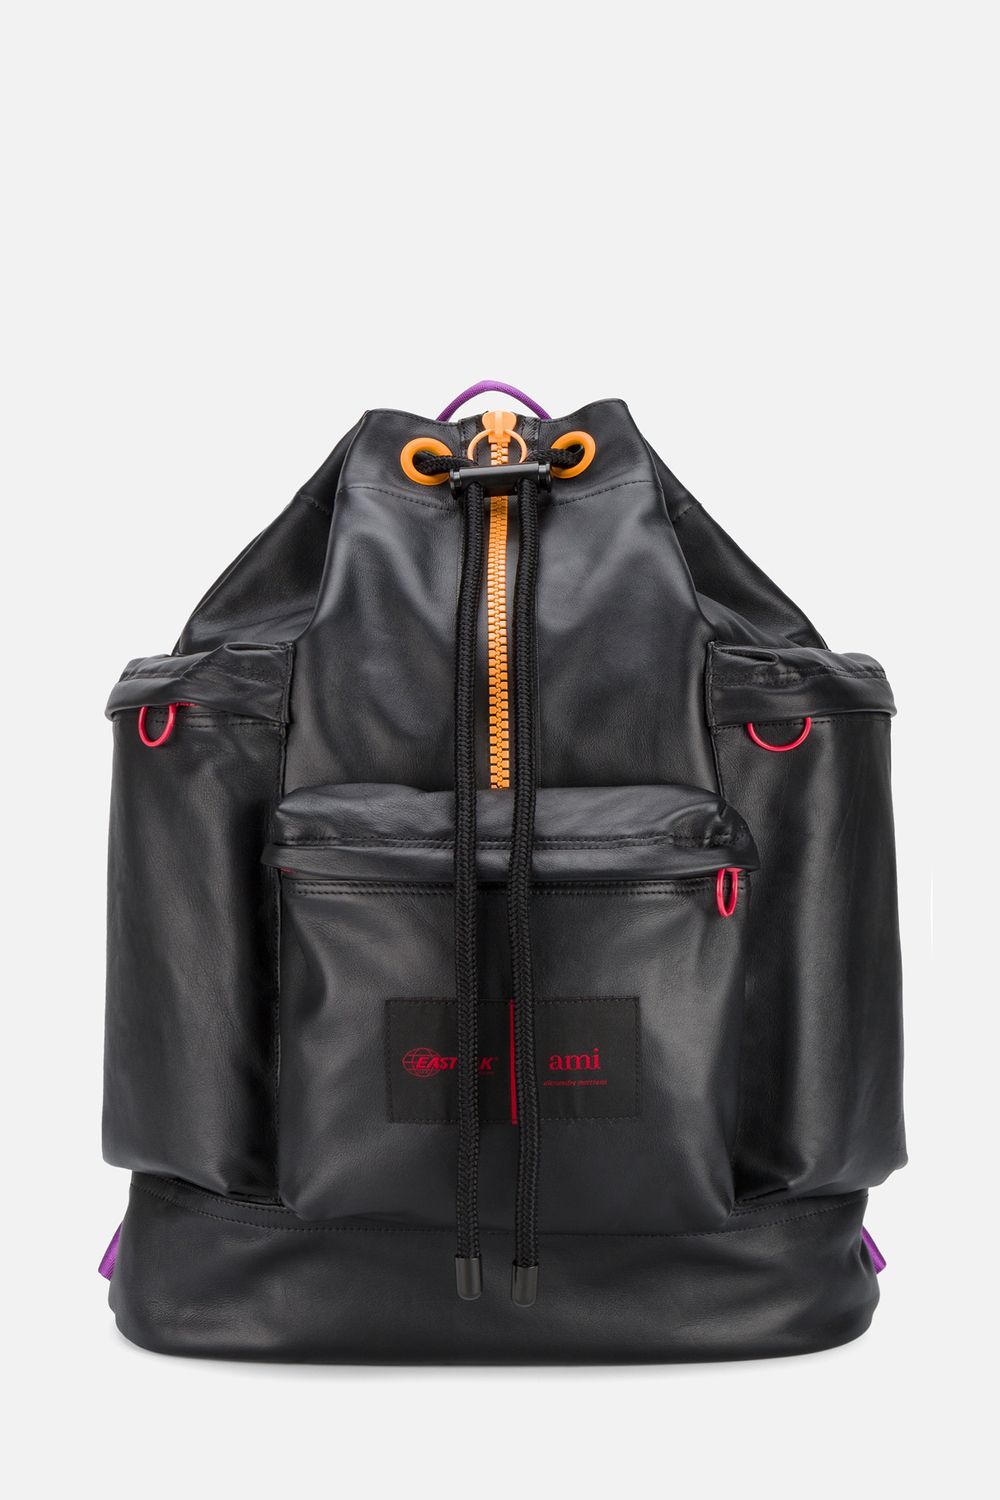 Pre-owned Ami X Eastpak Black Leather Rucksack Backpack